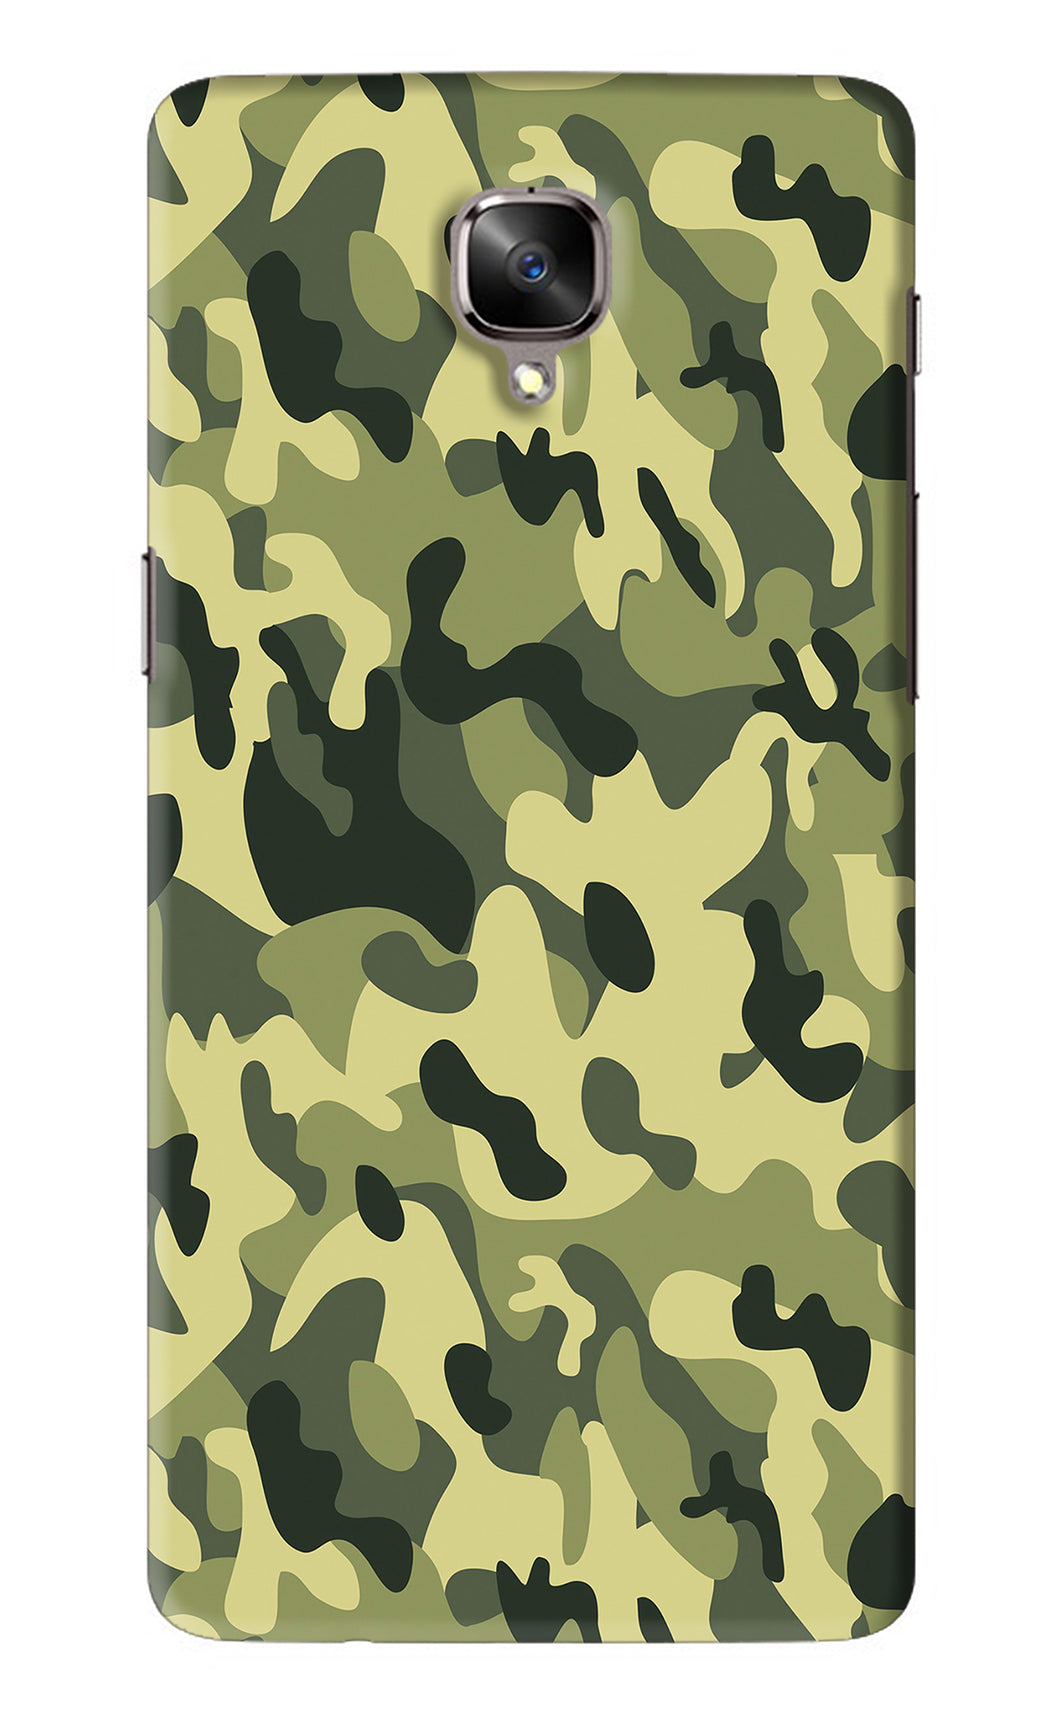 Camouflage OnePlus 3 Back Skin Wrap